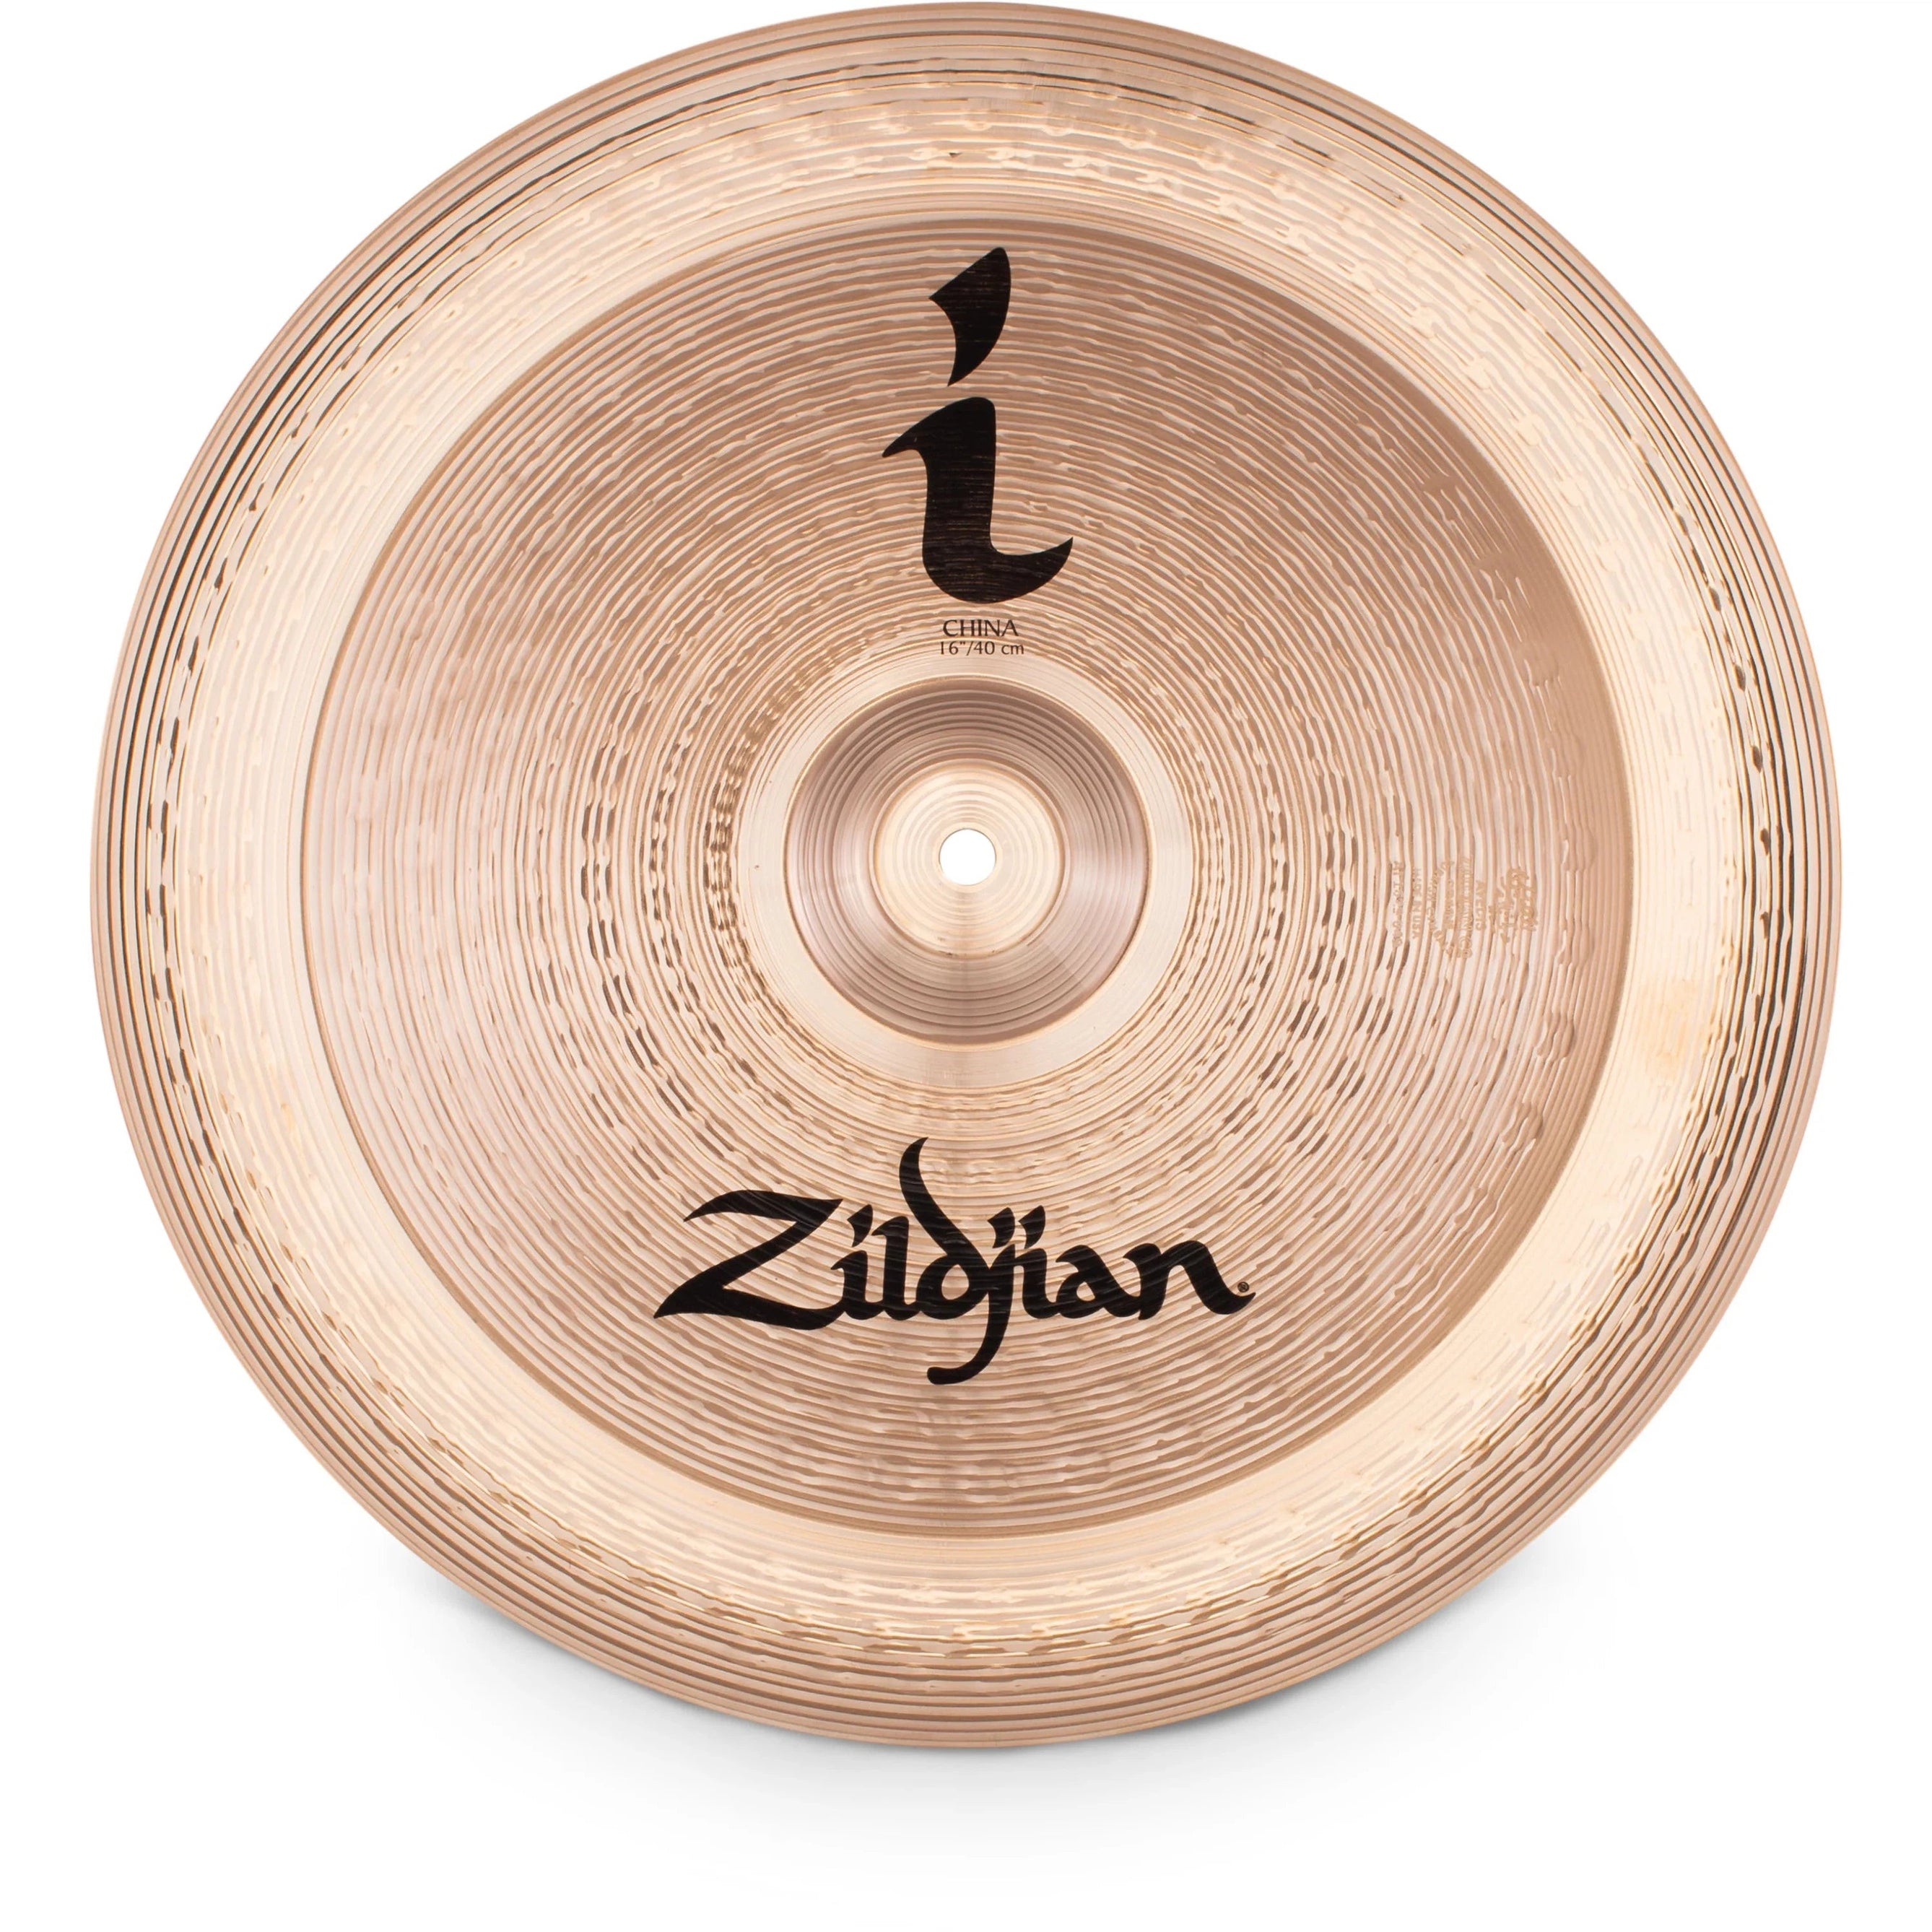 FX Cymbal Zildjian I Chinas-Mai Nguyên Music